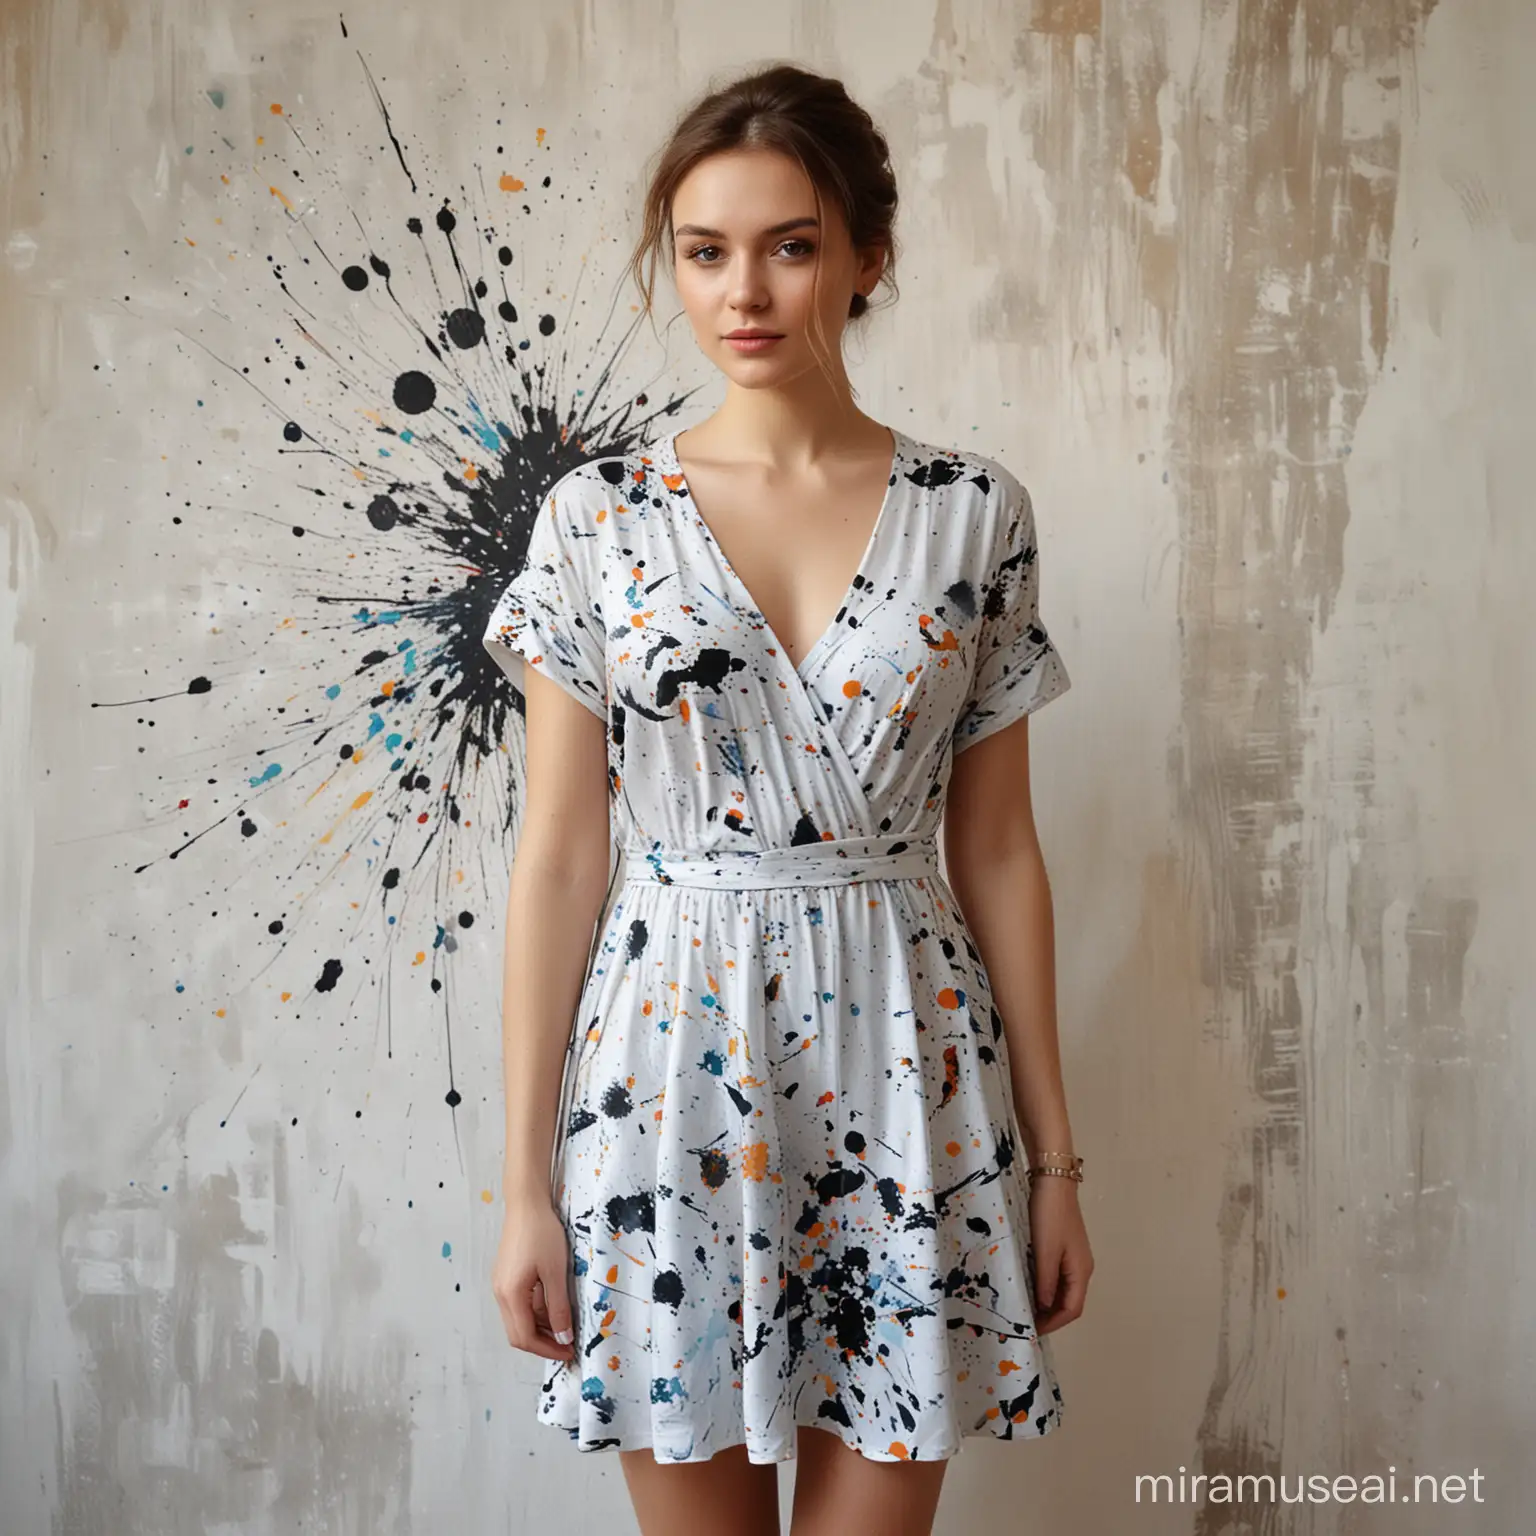 Mariya Berseneva Painting in Modern Greek Style Dress with Splattered Paint